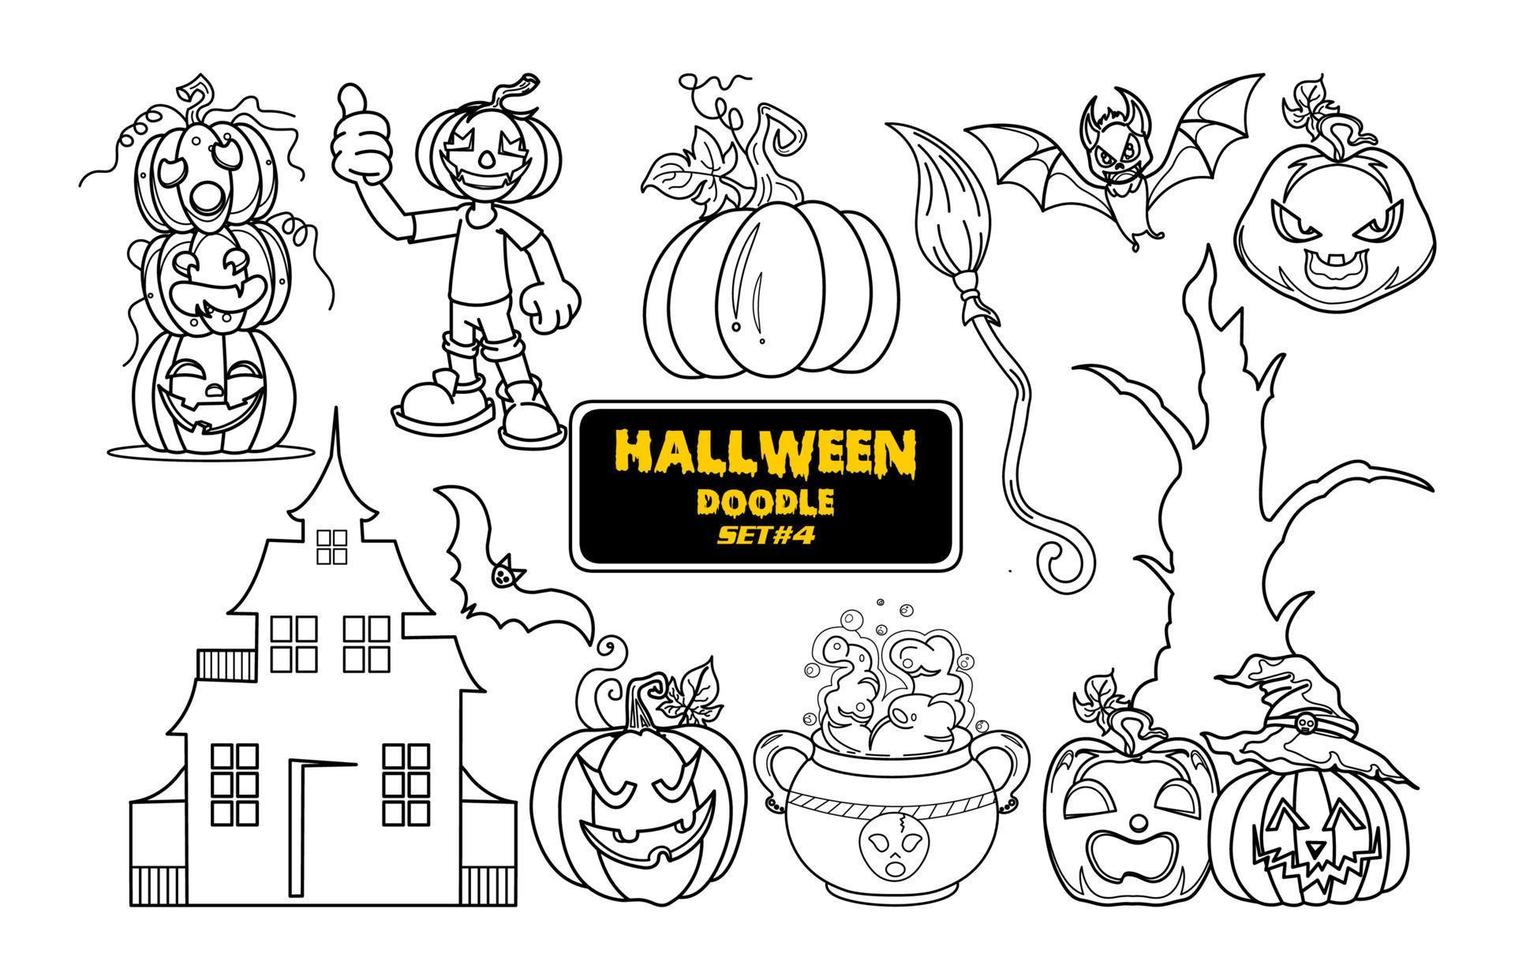 Halloween hand drawn doodle. Cute Halloween Digital Stamp Set. vector